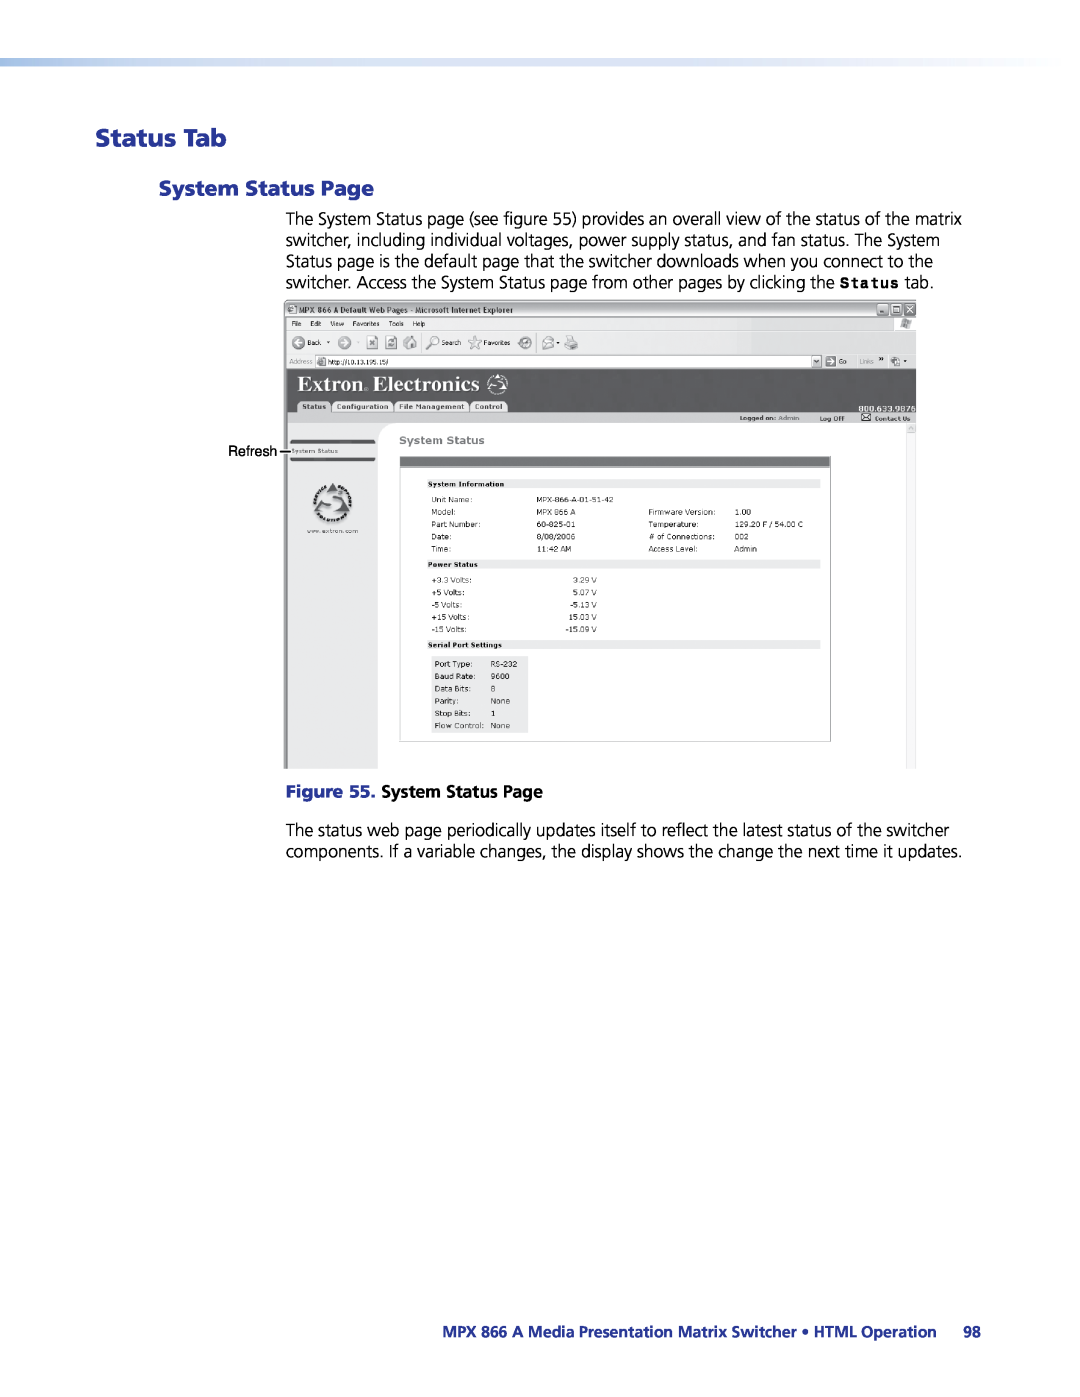 Extron electronic manual Status Tab, System Status Page, MPX 866 A Media Presentation Matrix Switcher HTML Operation 